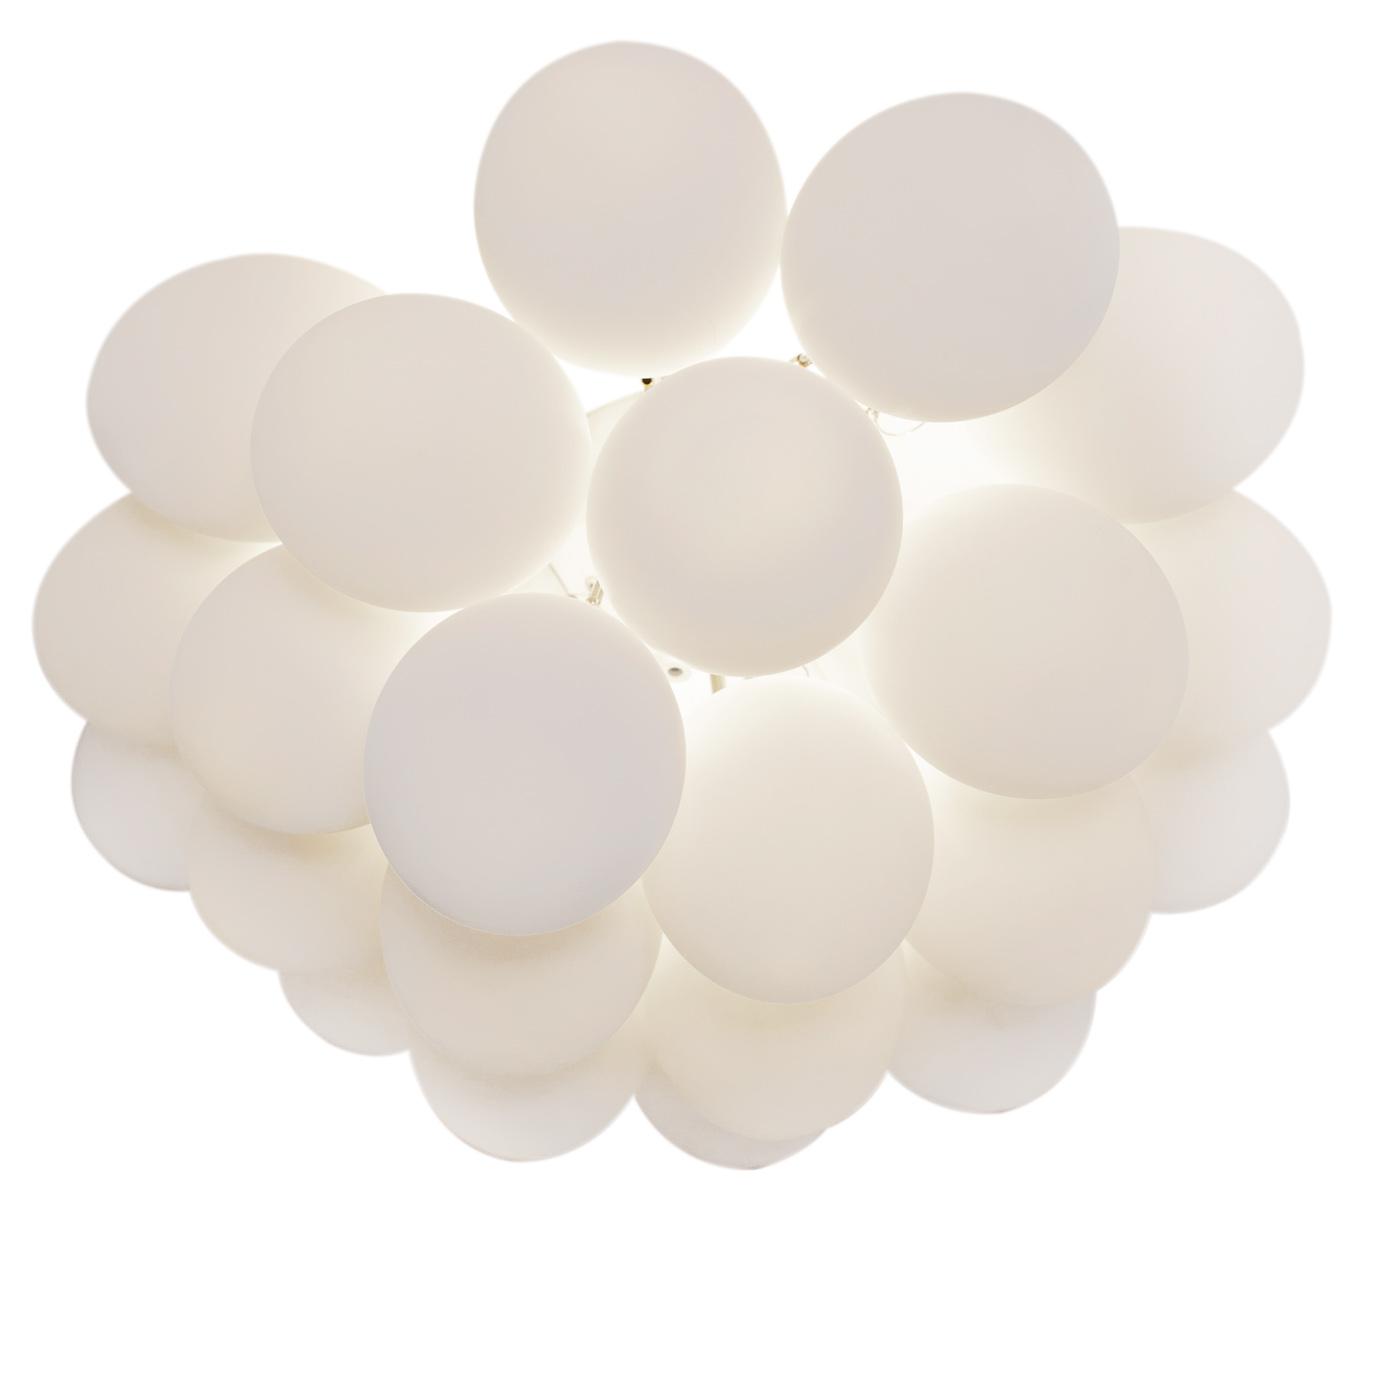 Gross 50 ceiling light väri-variaatio Valkoinen 